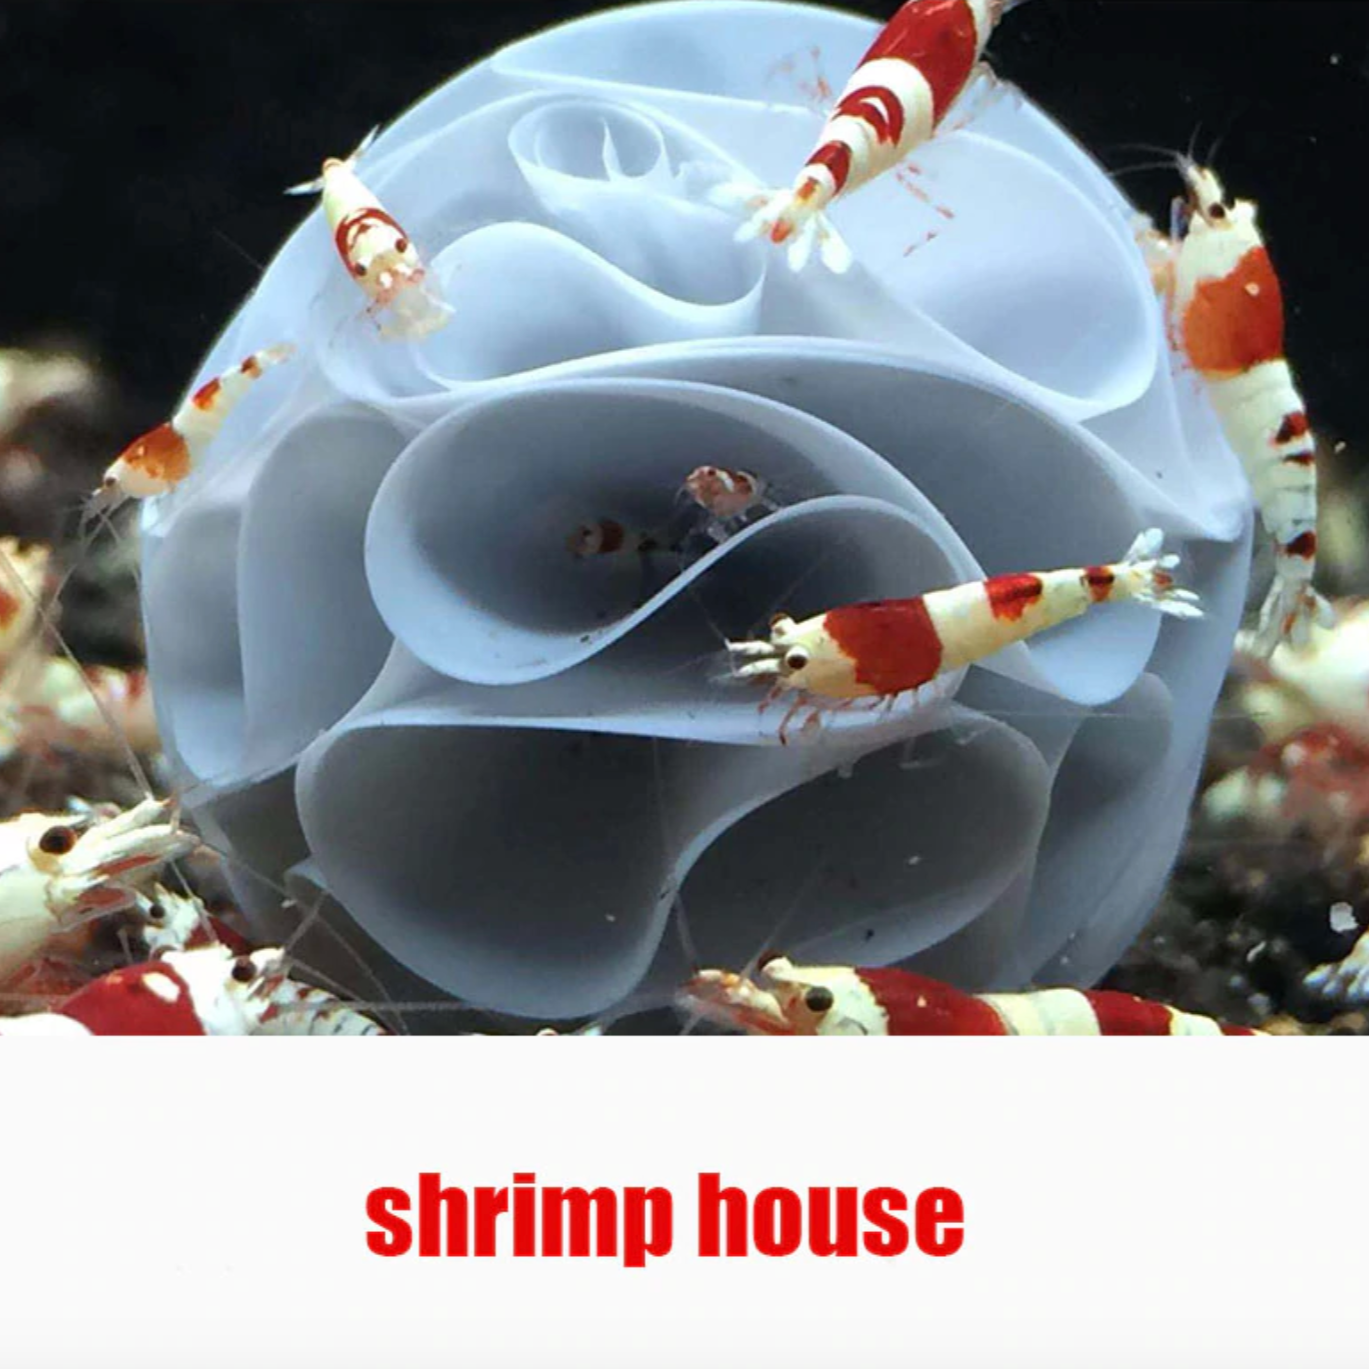 Shrimp House Moss Balls Aquatic Breeding Hiding Houses Aquarium